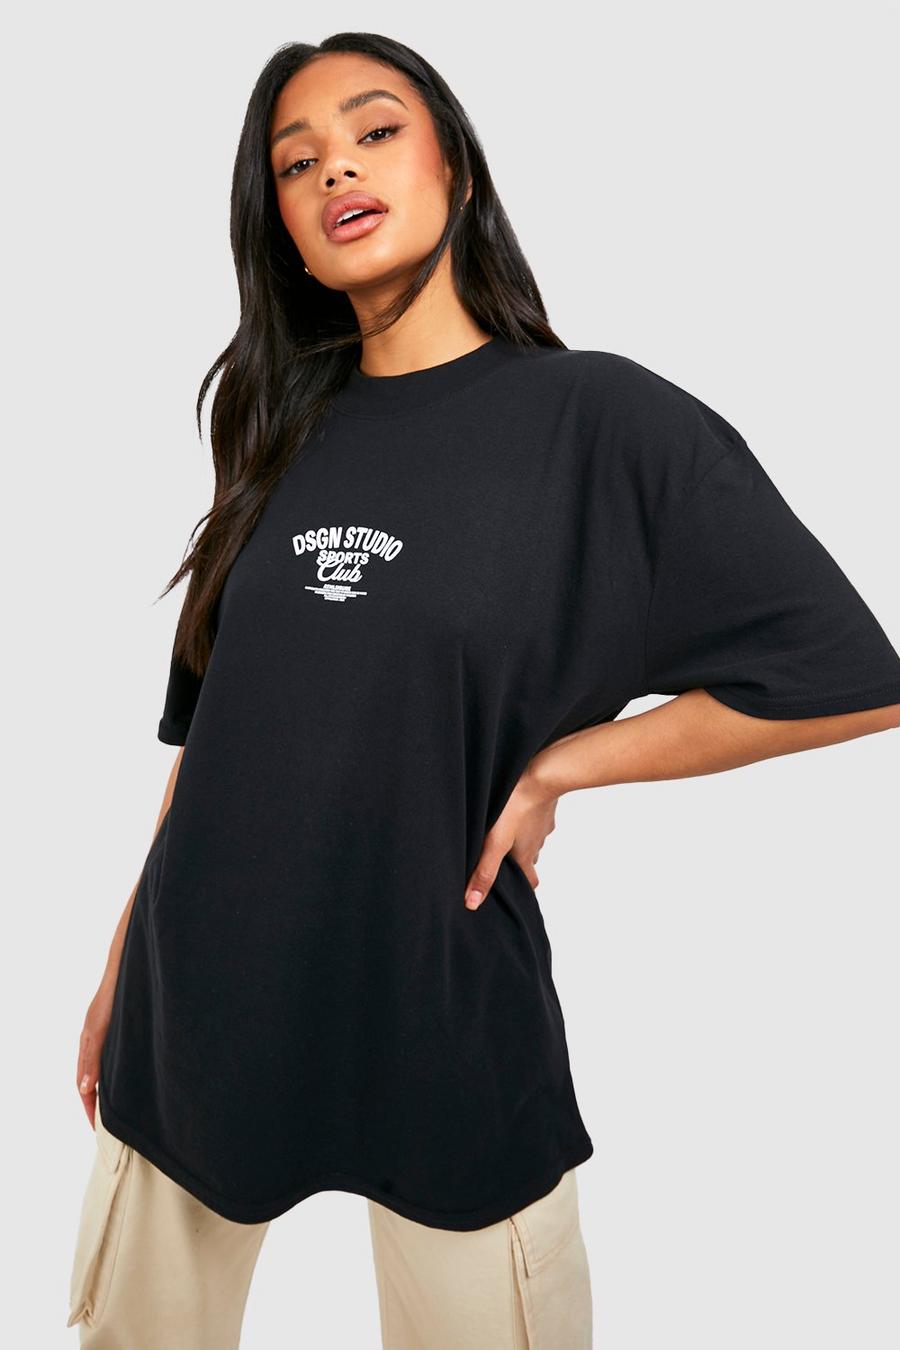 Dsgn Studio Sports Club Slogan Oversized T-shirt | boohoo